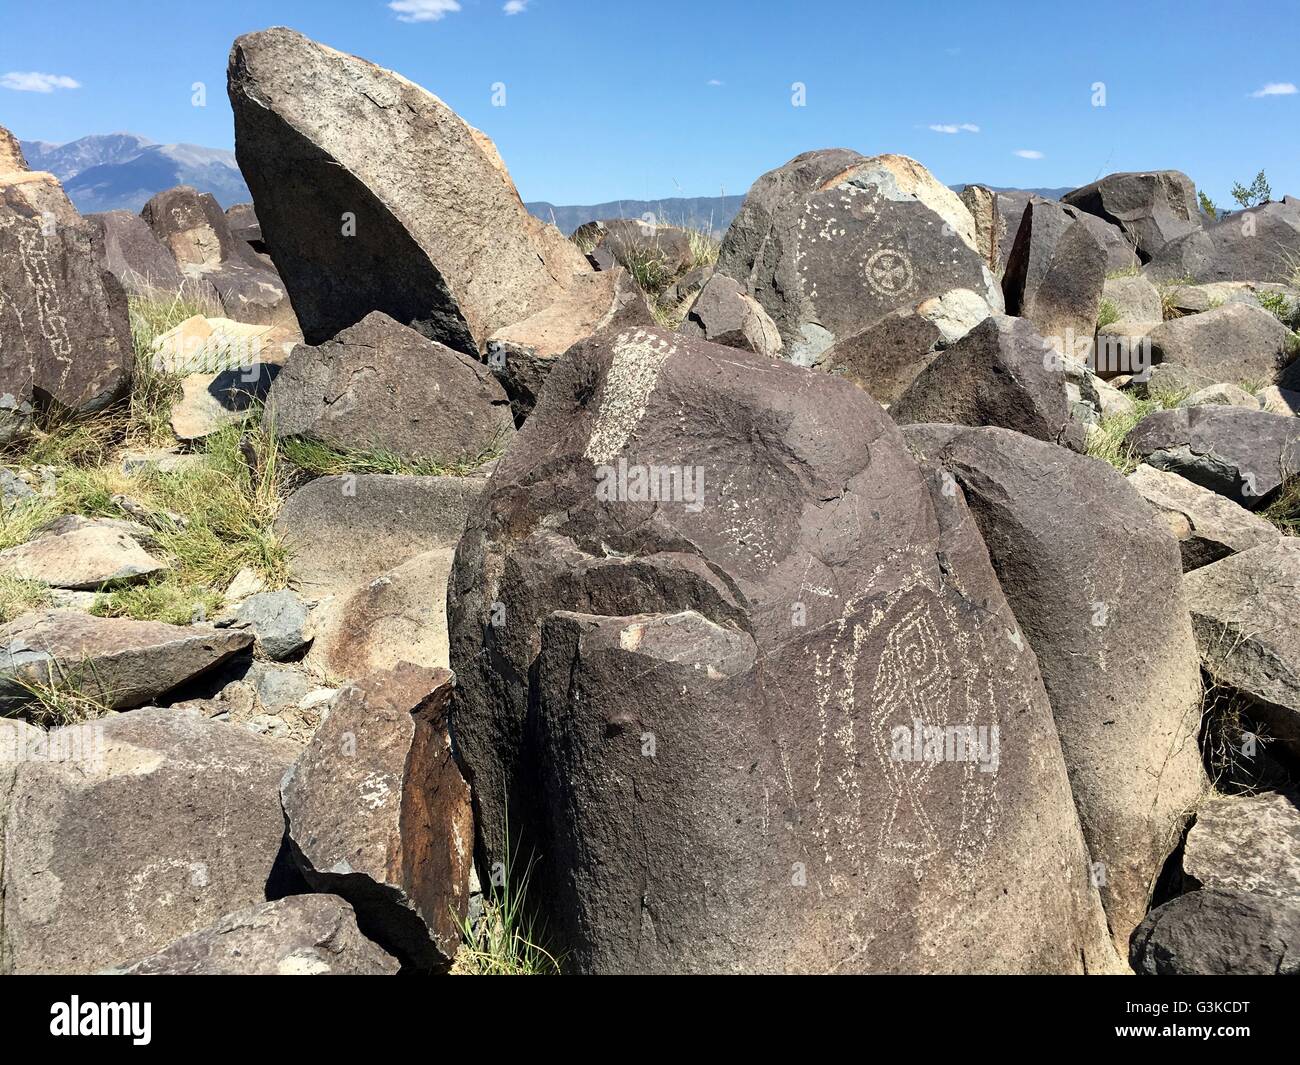 Native Americans (Jornada Mogollon people) carved petroglyphs on rocks at Three Rivers Petroglyph Site near Tularosa, New Mexico Stock Photo